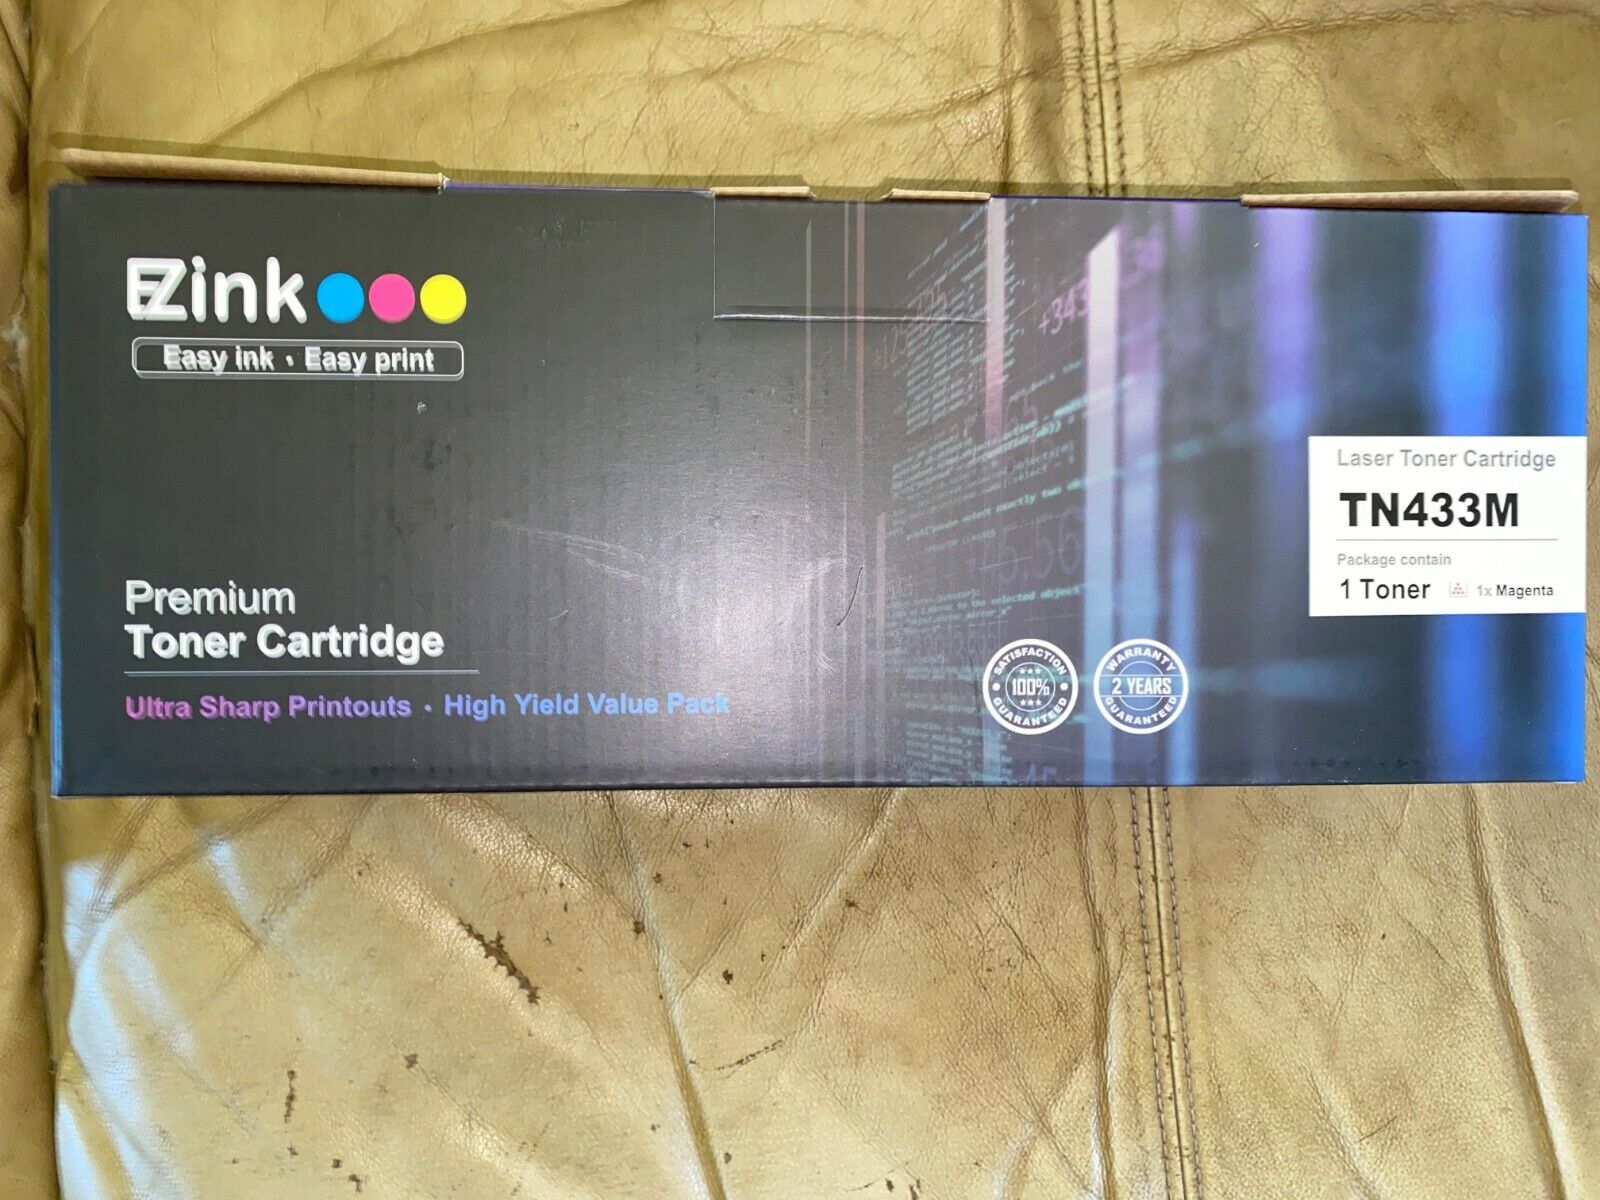 EZink Easy Ink Easy Print, Premium Toner Cartridge  TN433M Magenta